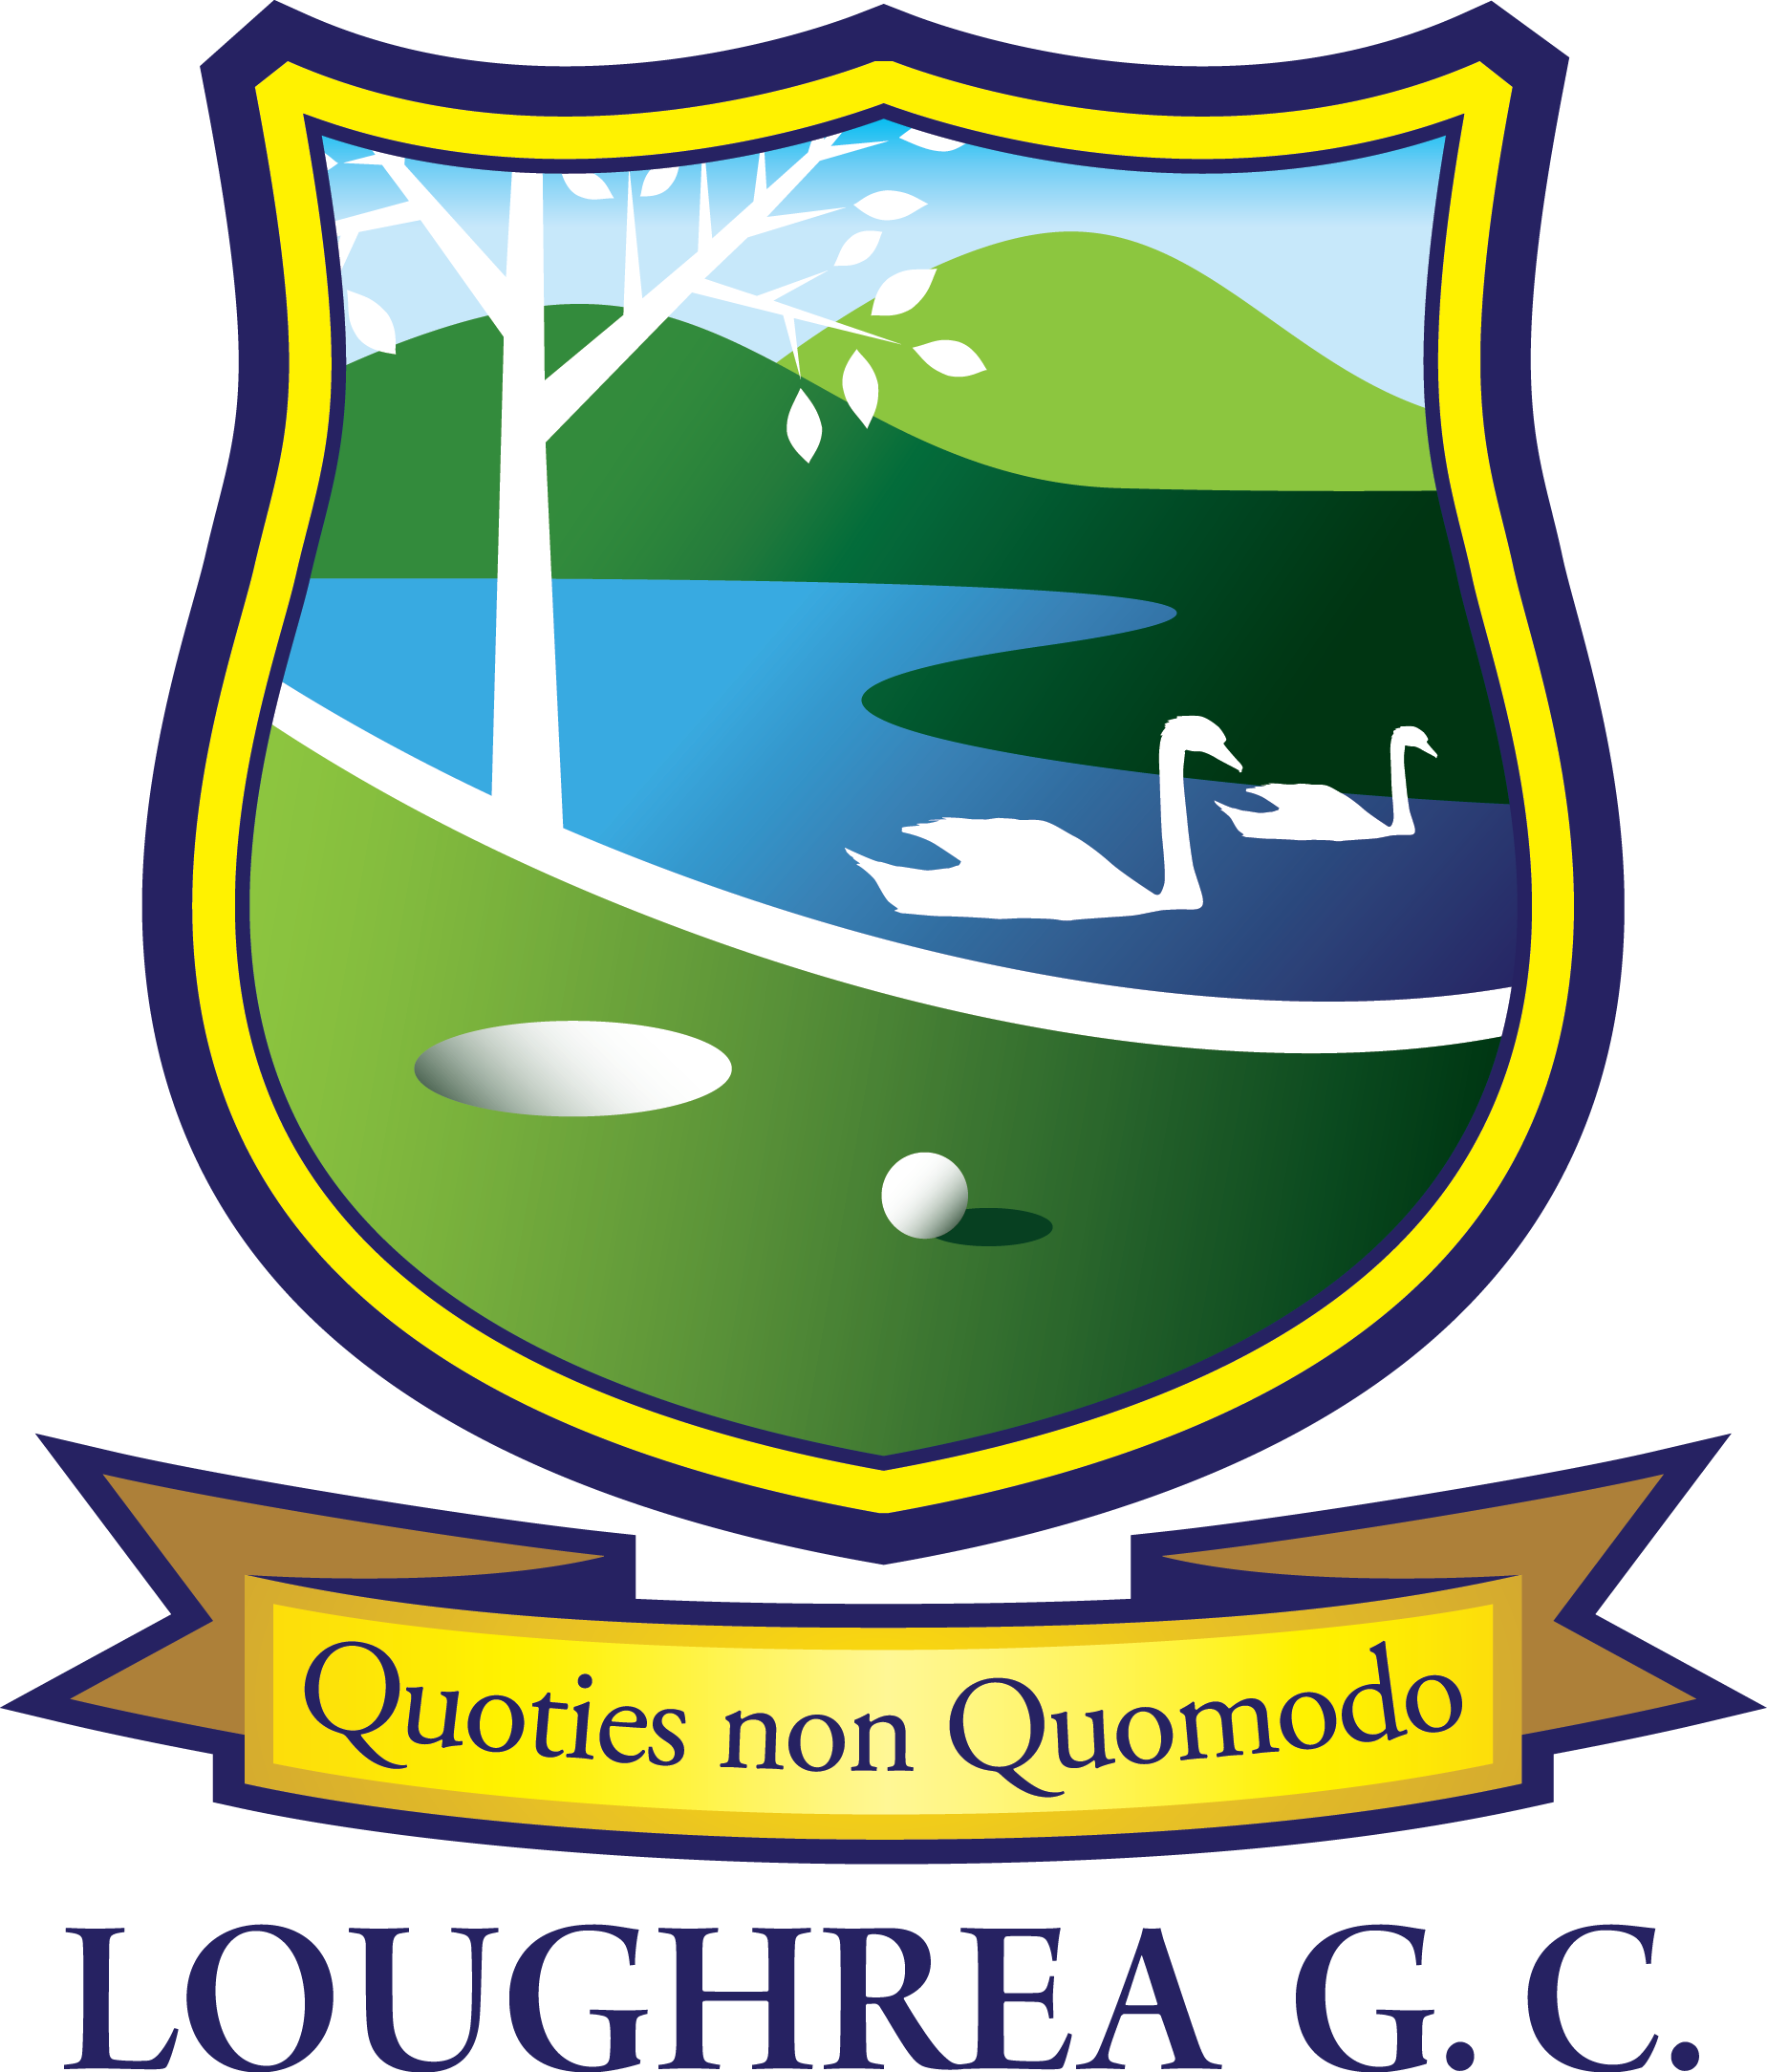 Loughrea Logo Crest Gc Cmyk - Loughrea (1849x2168)